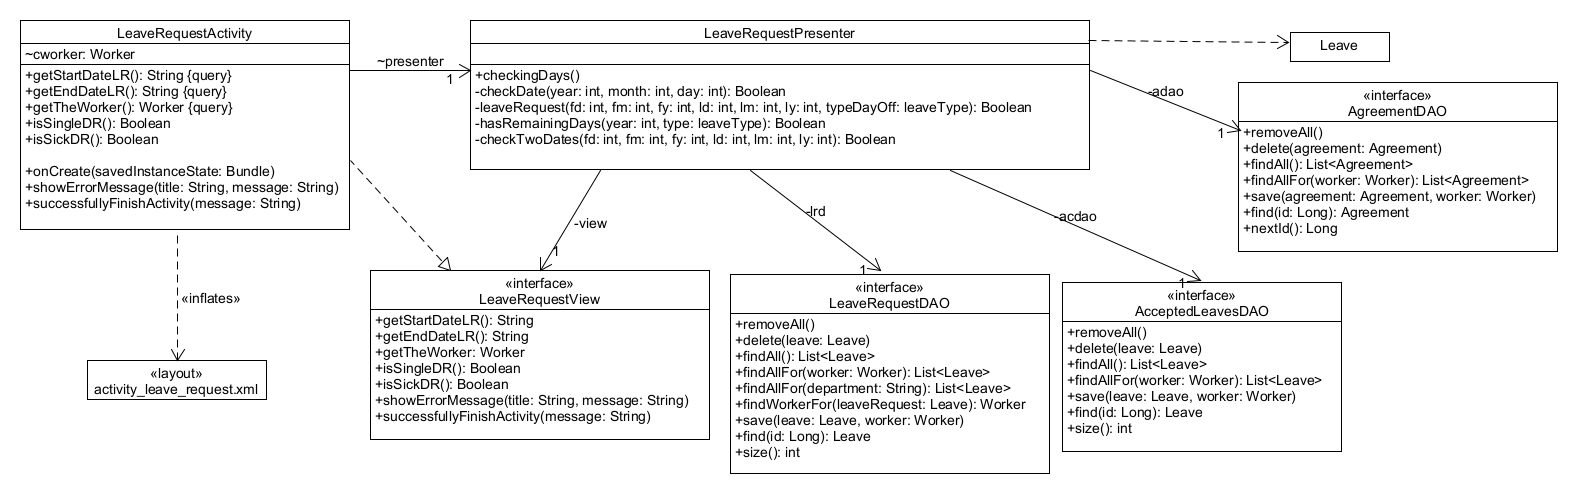 class-diagram-LeaveRequest.png